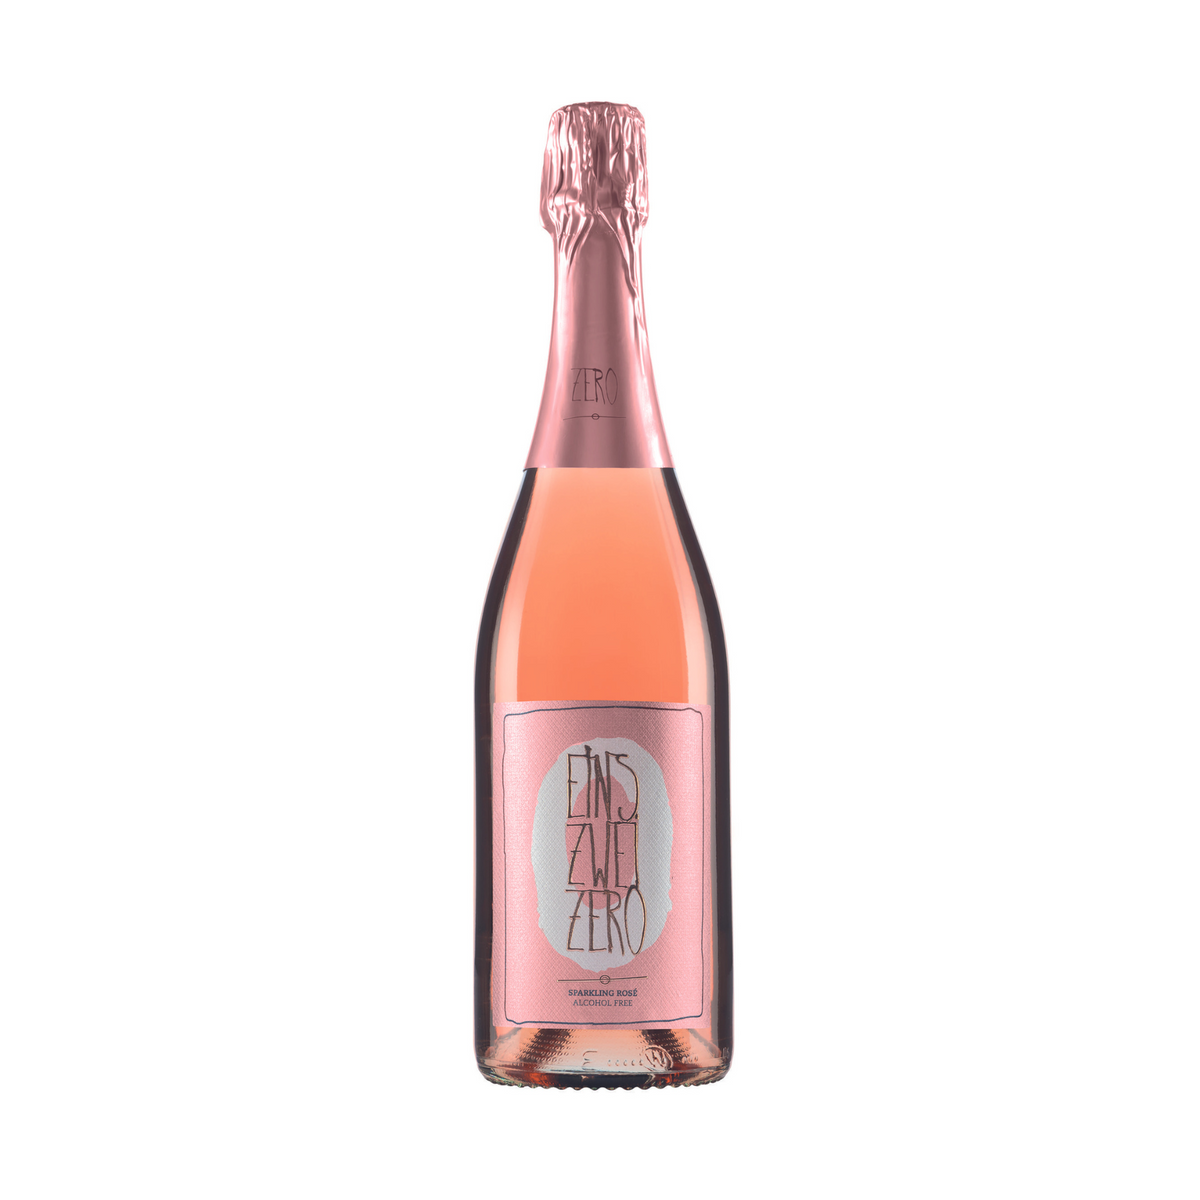 Leitz Eins-Zwei-Zero Sparkling Rosé | Non-Alcoholic